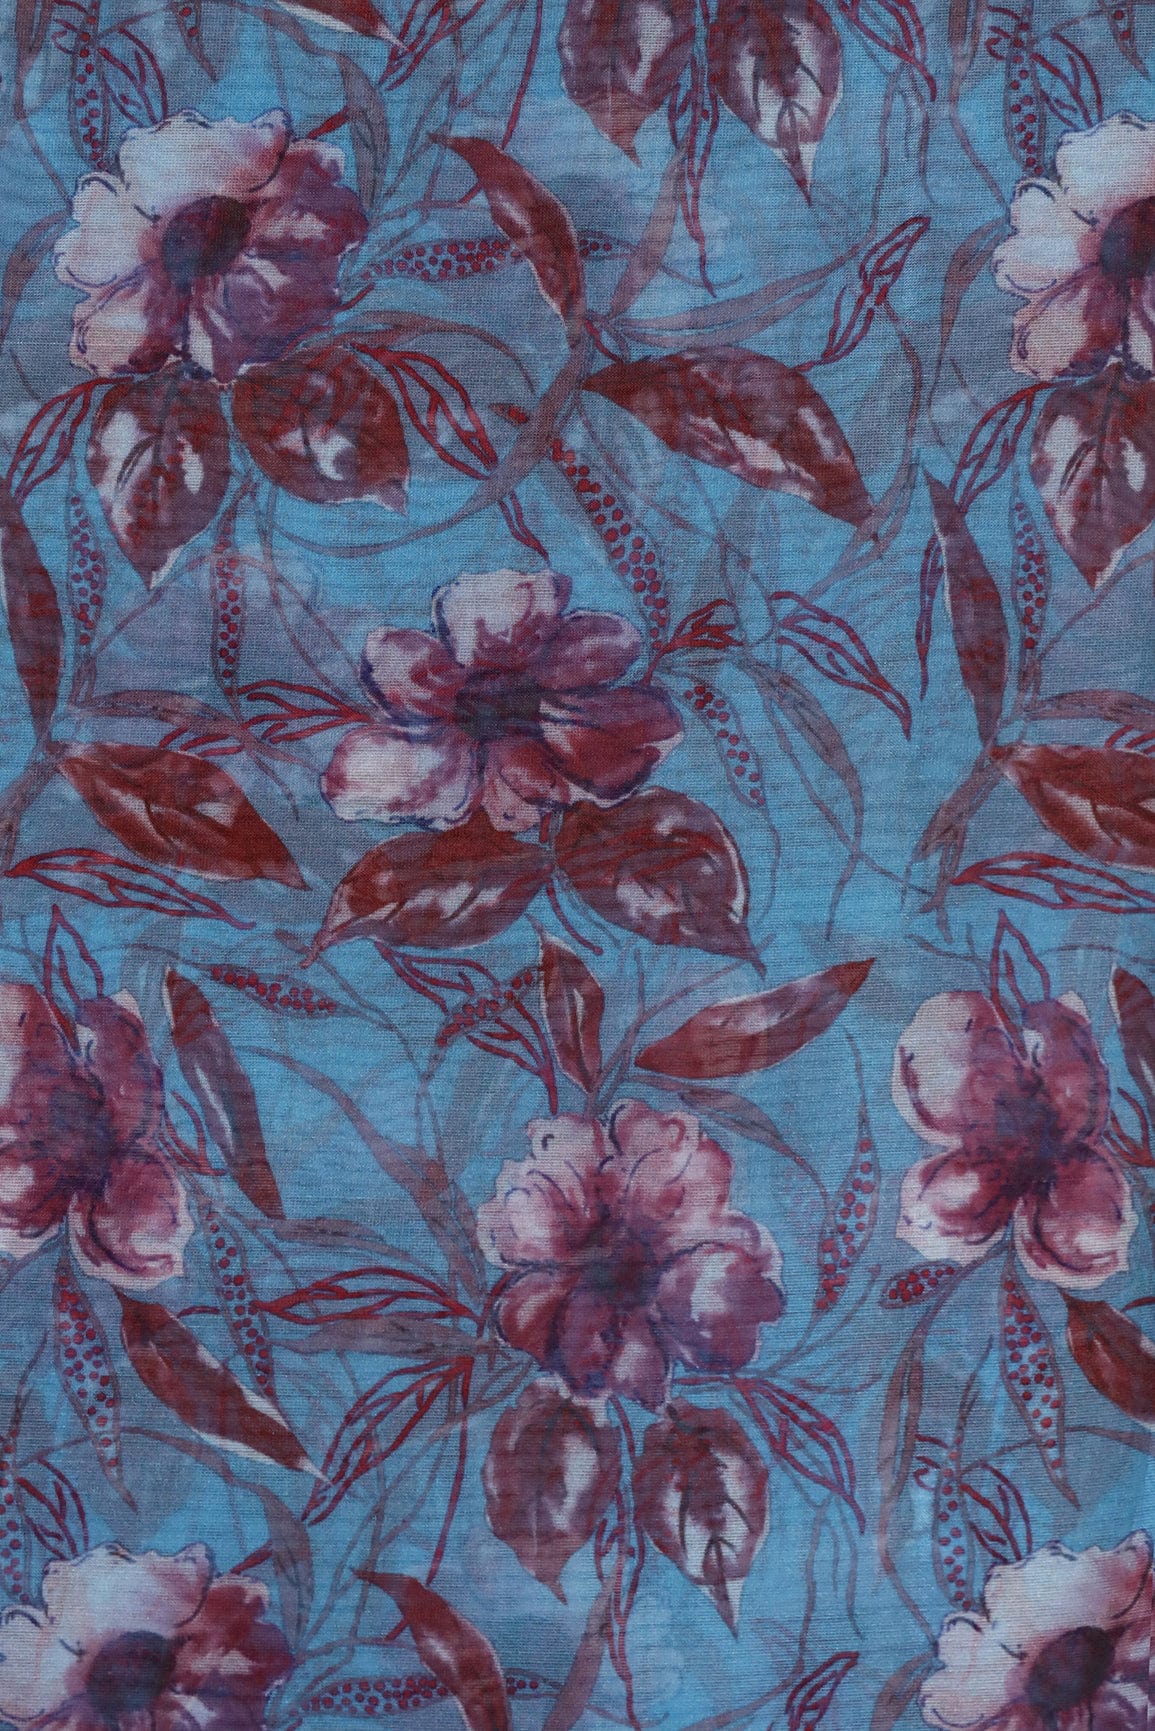 doeraa Prints Brown Floral Digital Print On Light Blue Organza Fabric